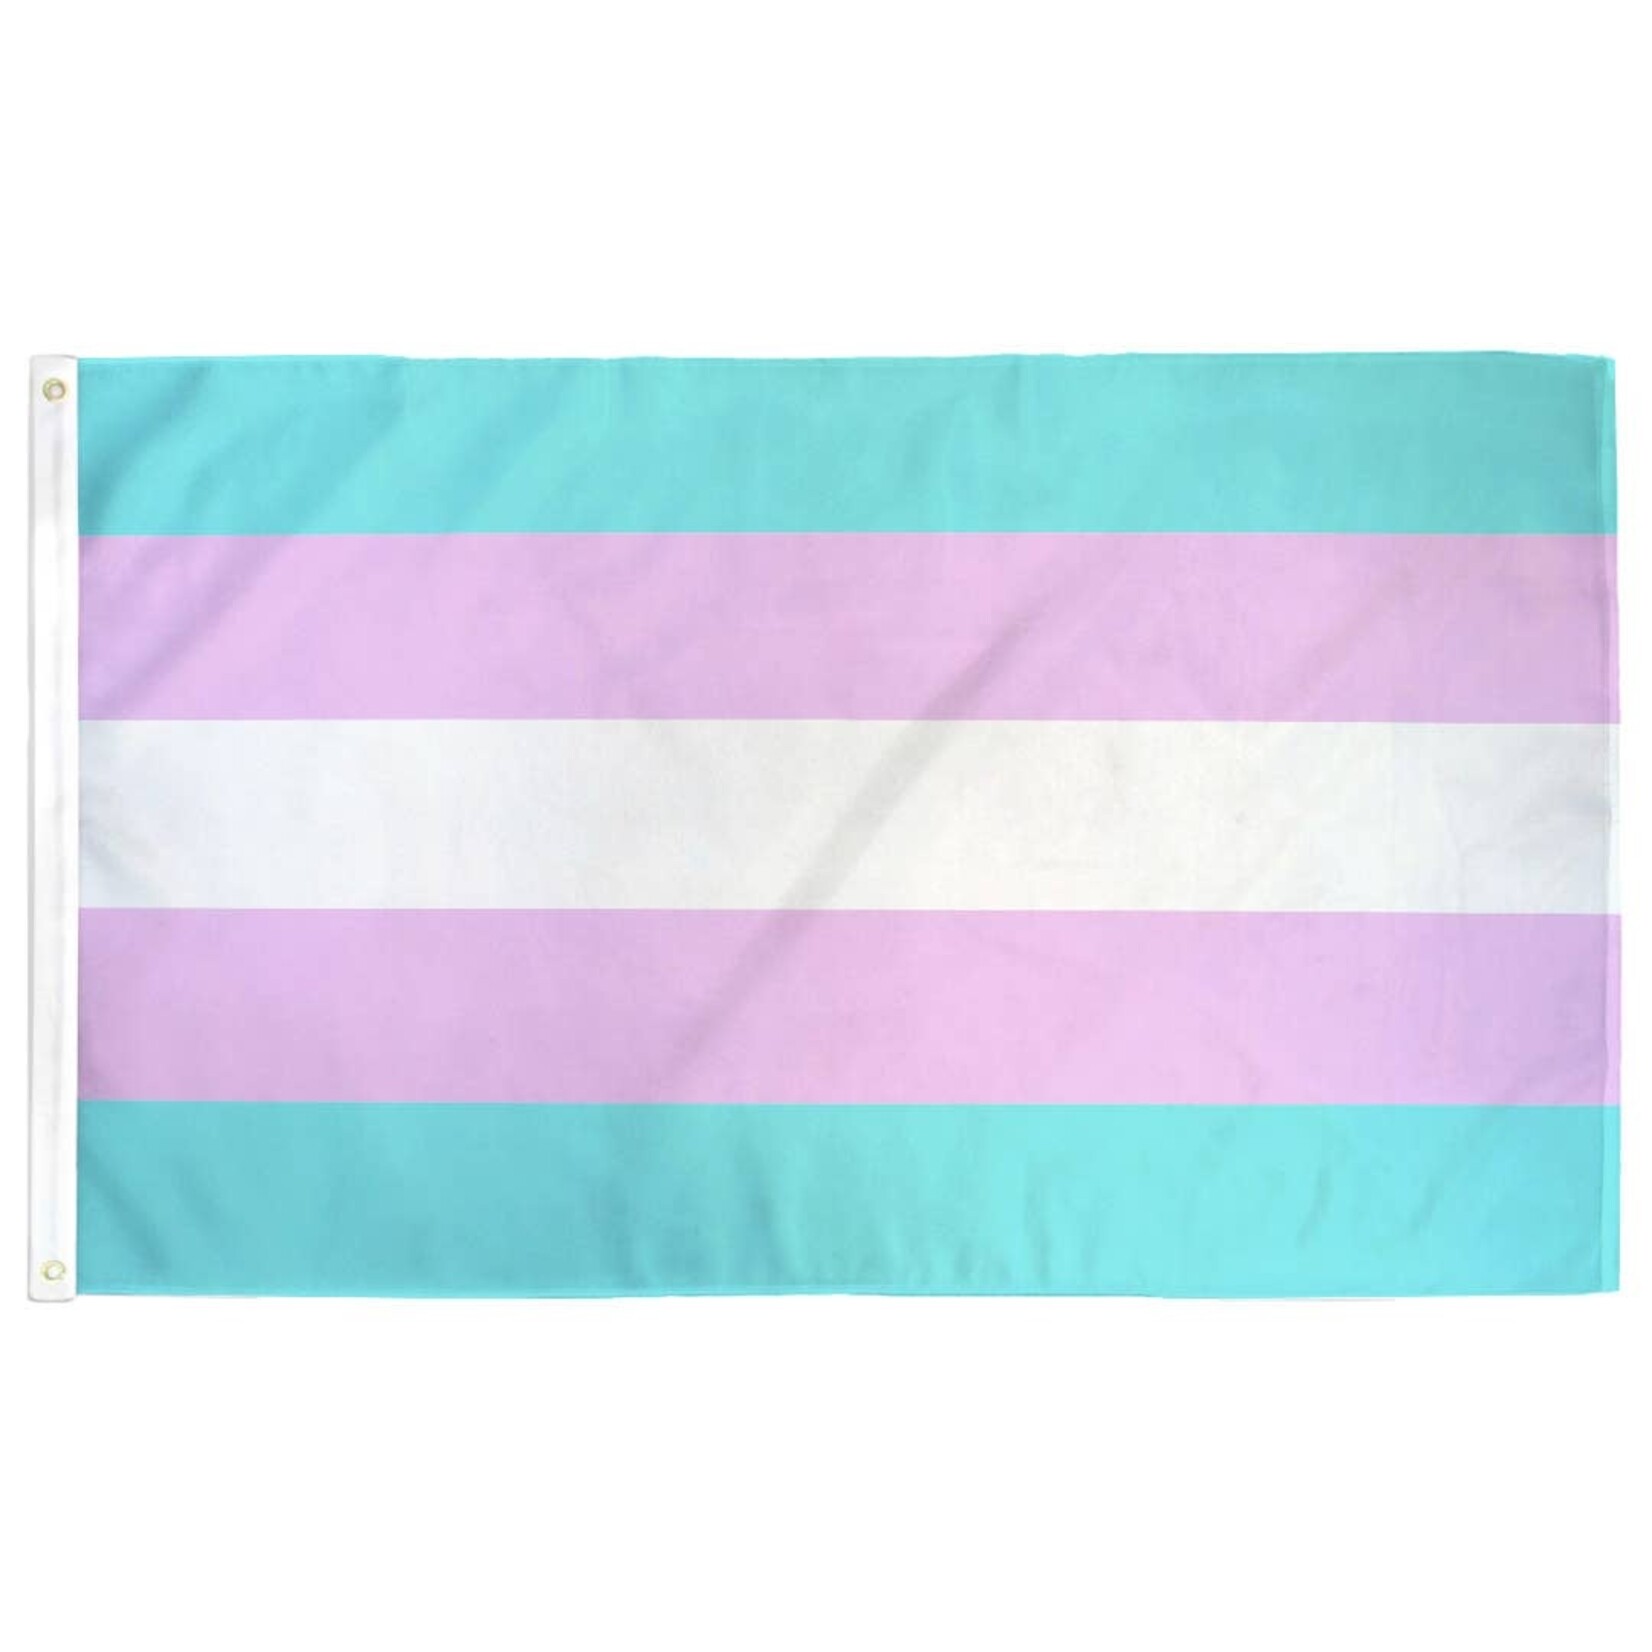 Flags For Good Transgender (Trans) Pride Flag